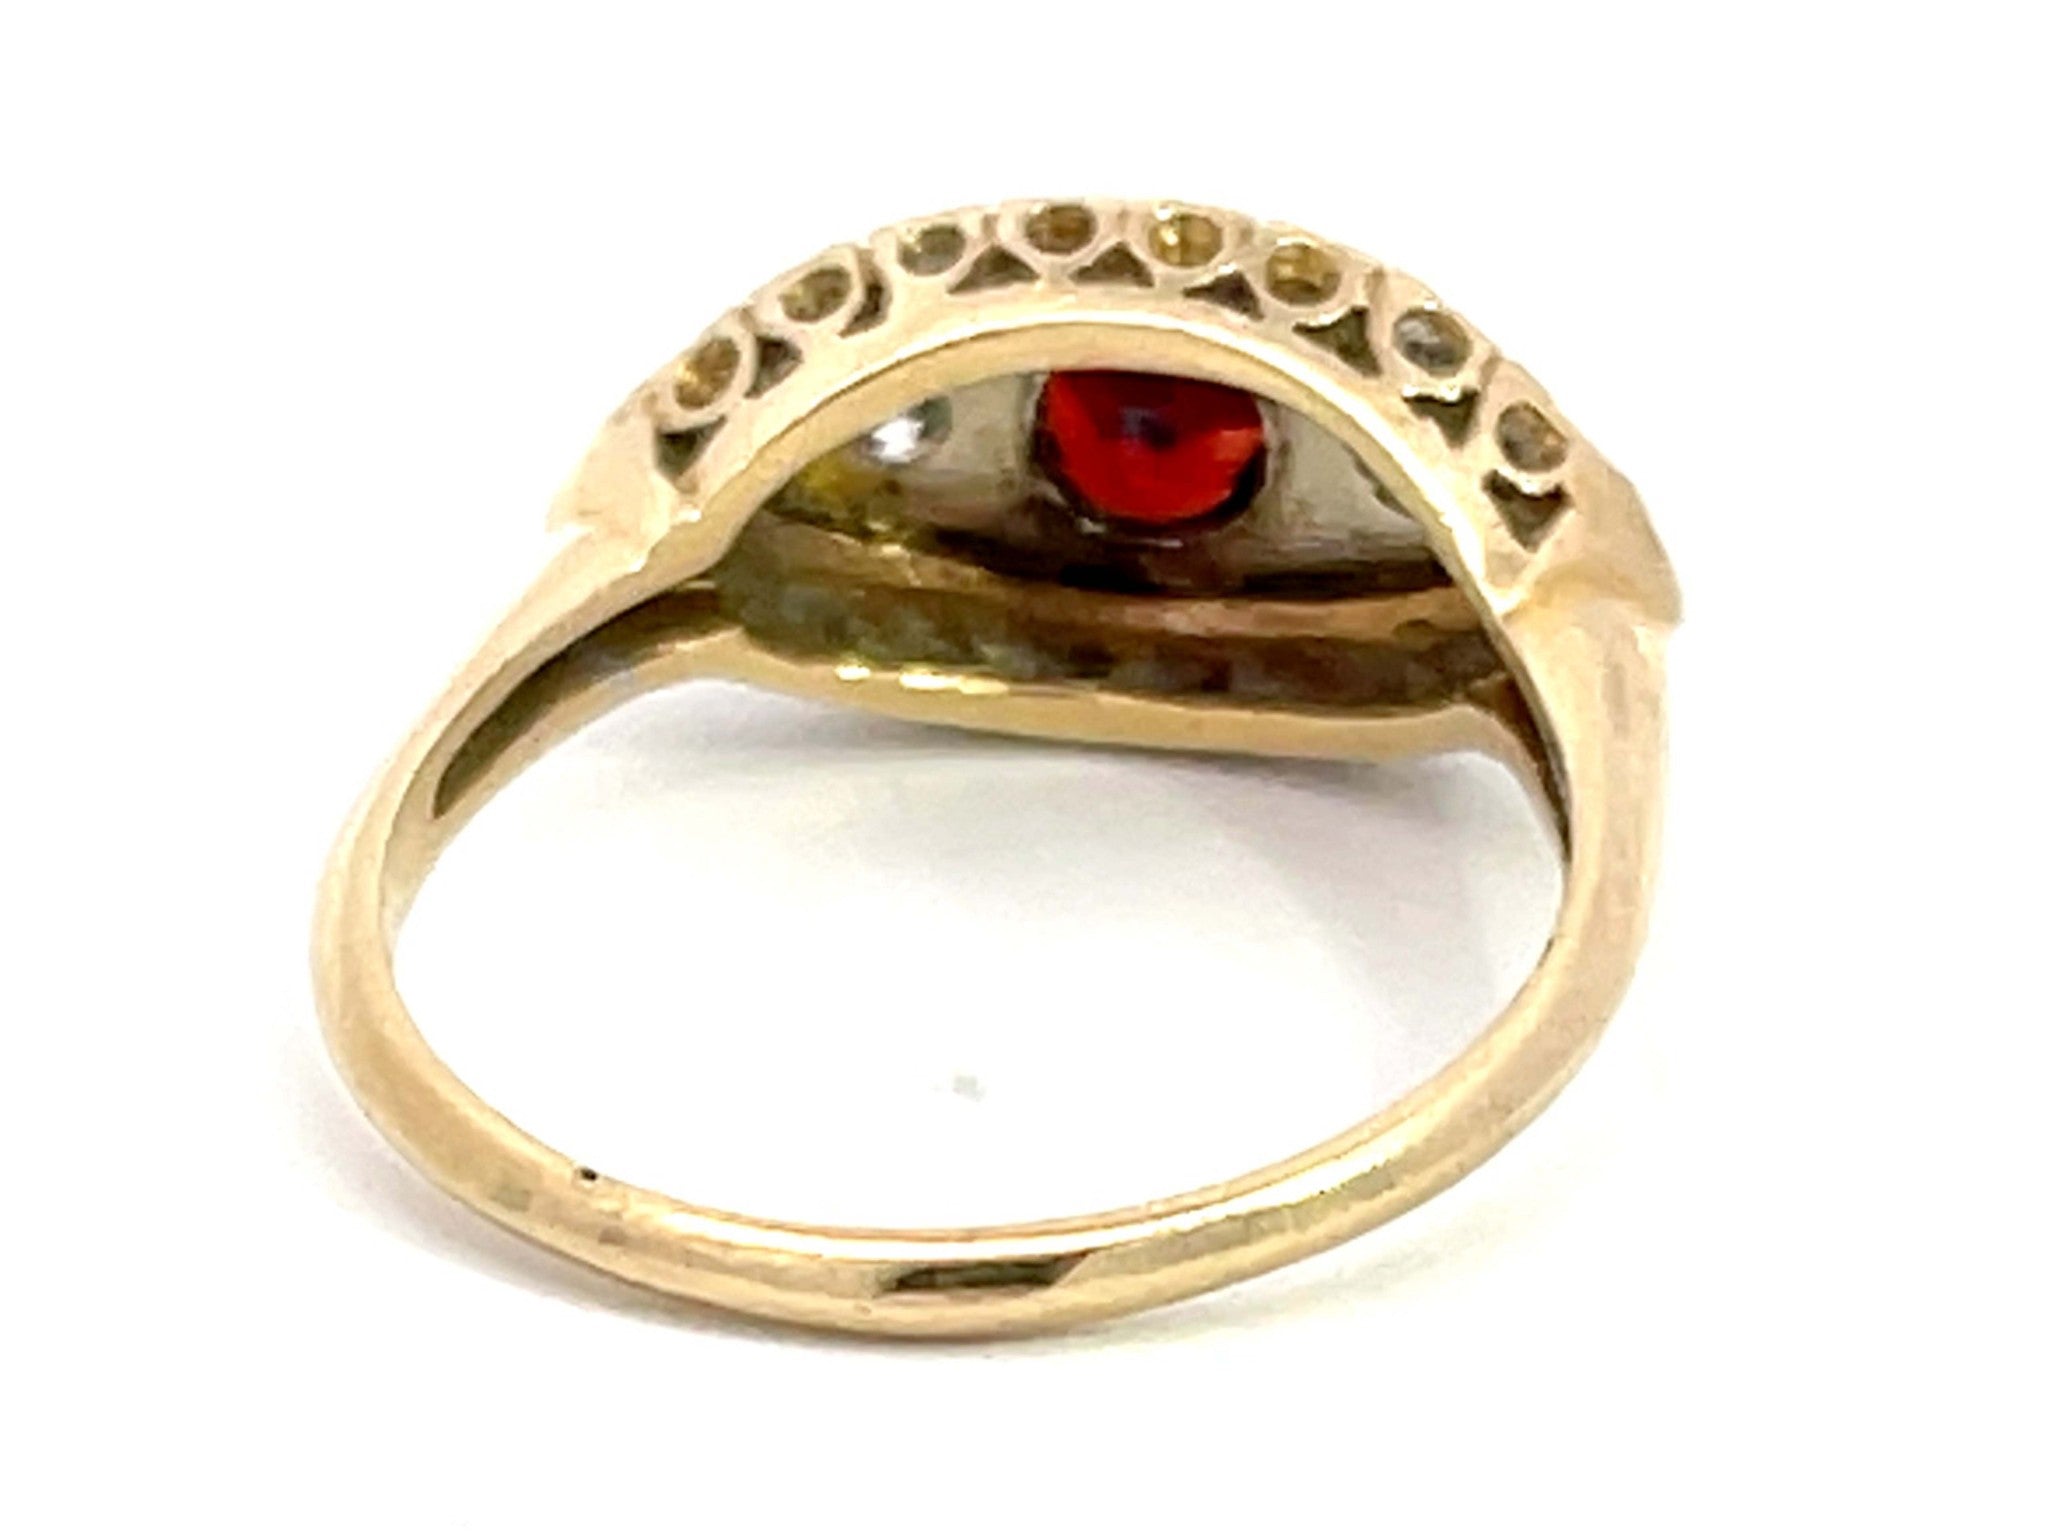 Art Deco Rubellite Garnet and Diamond Eye Ring in 14k Yellow Gold